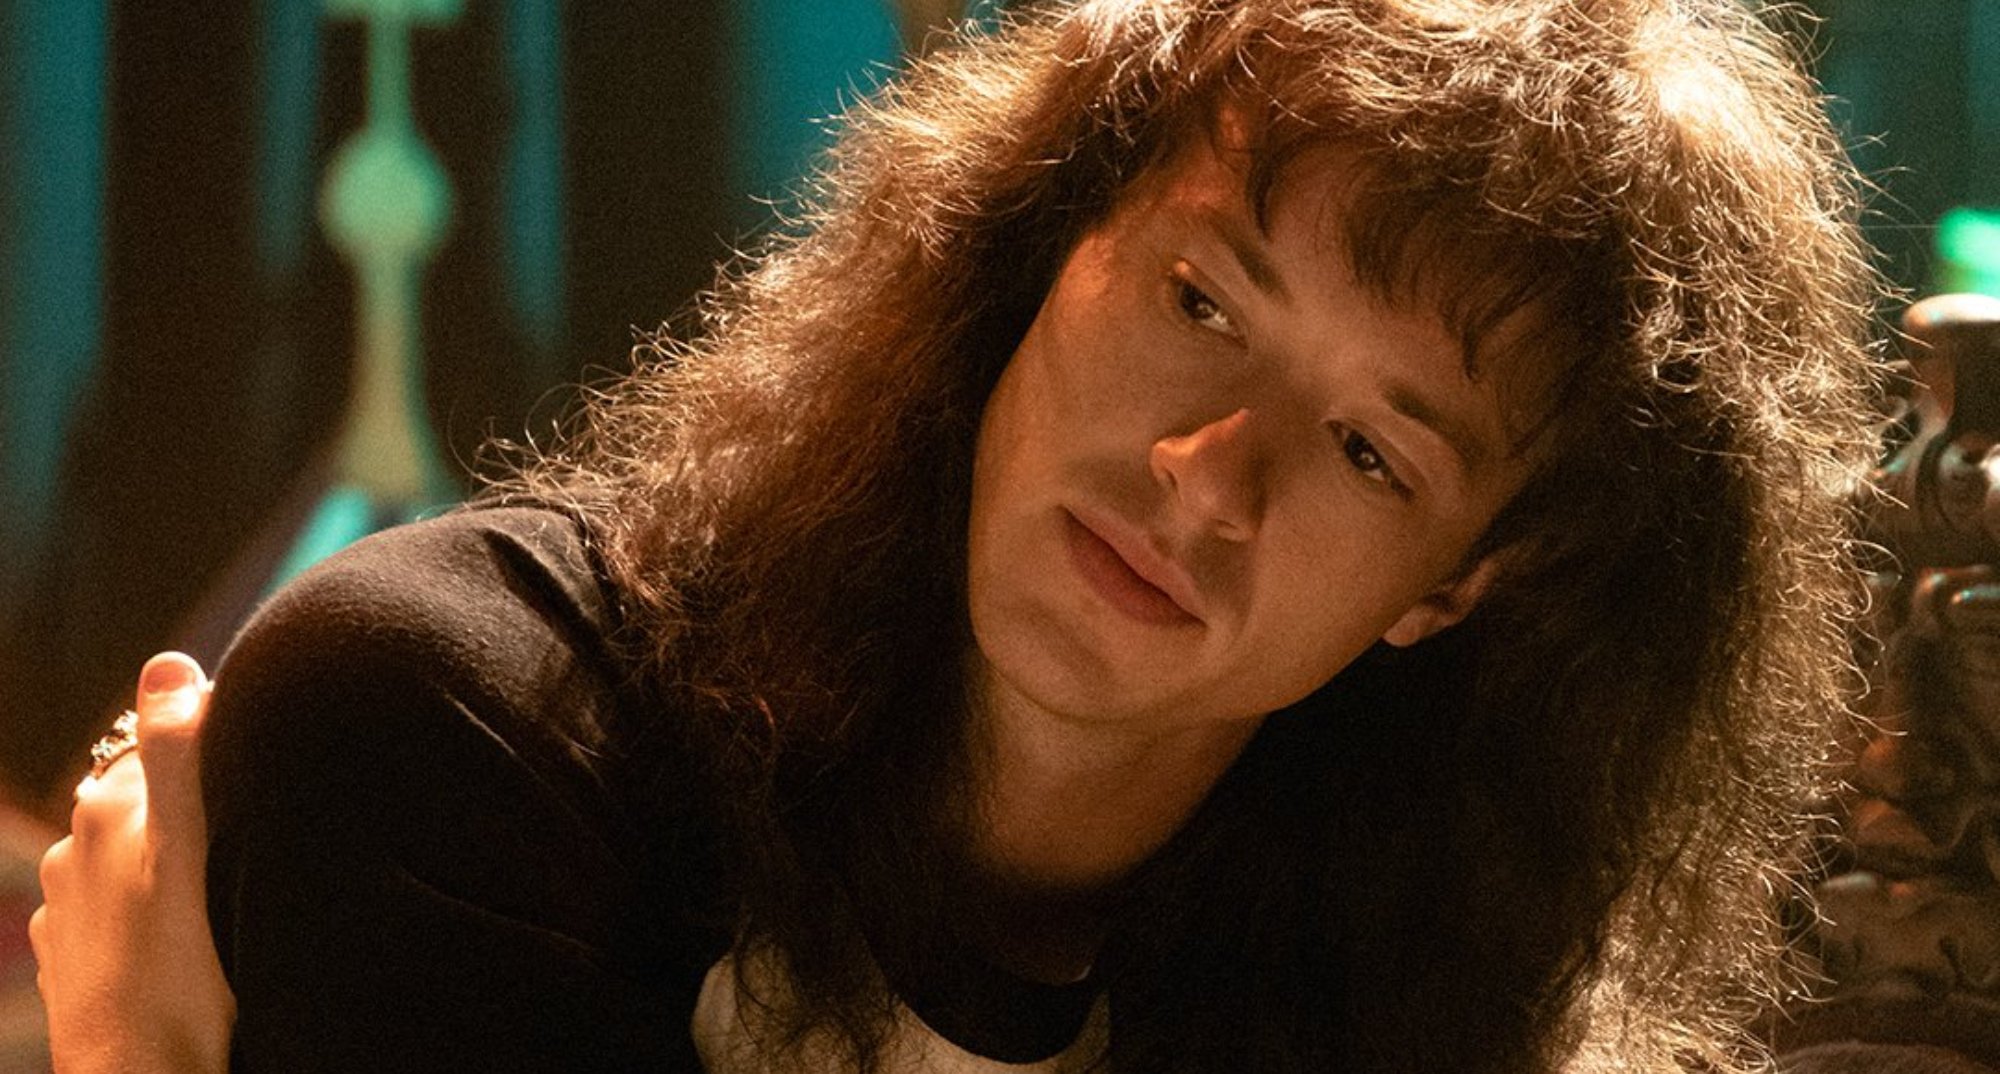 Stranger Things' Actor Who Played Eddie Munson Shreds Metallica